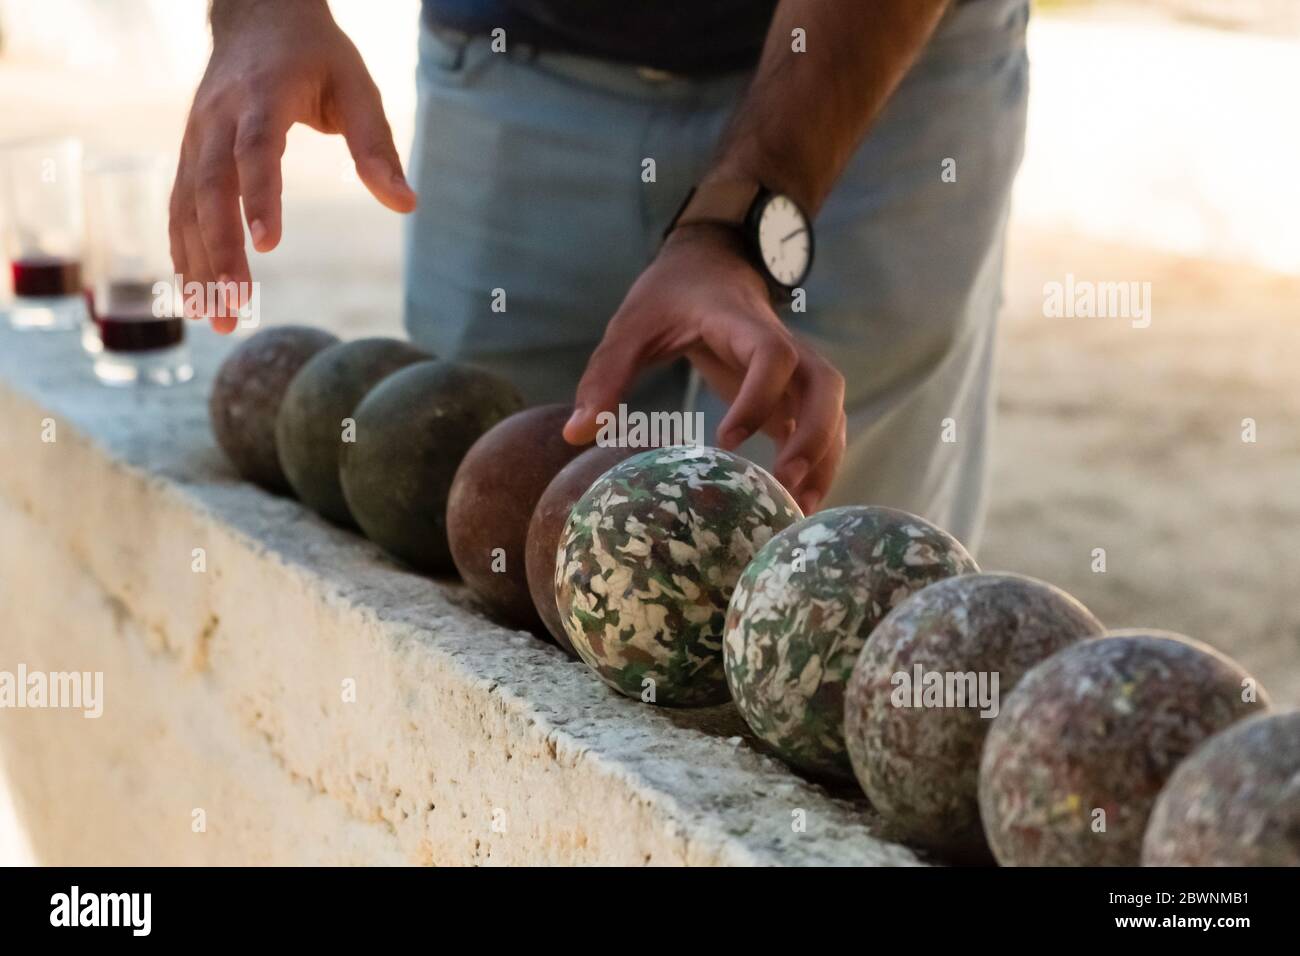 A man's hand grabs a stone lawn bowling ball Stock Photo